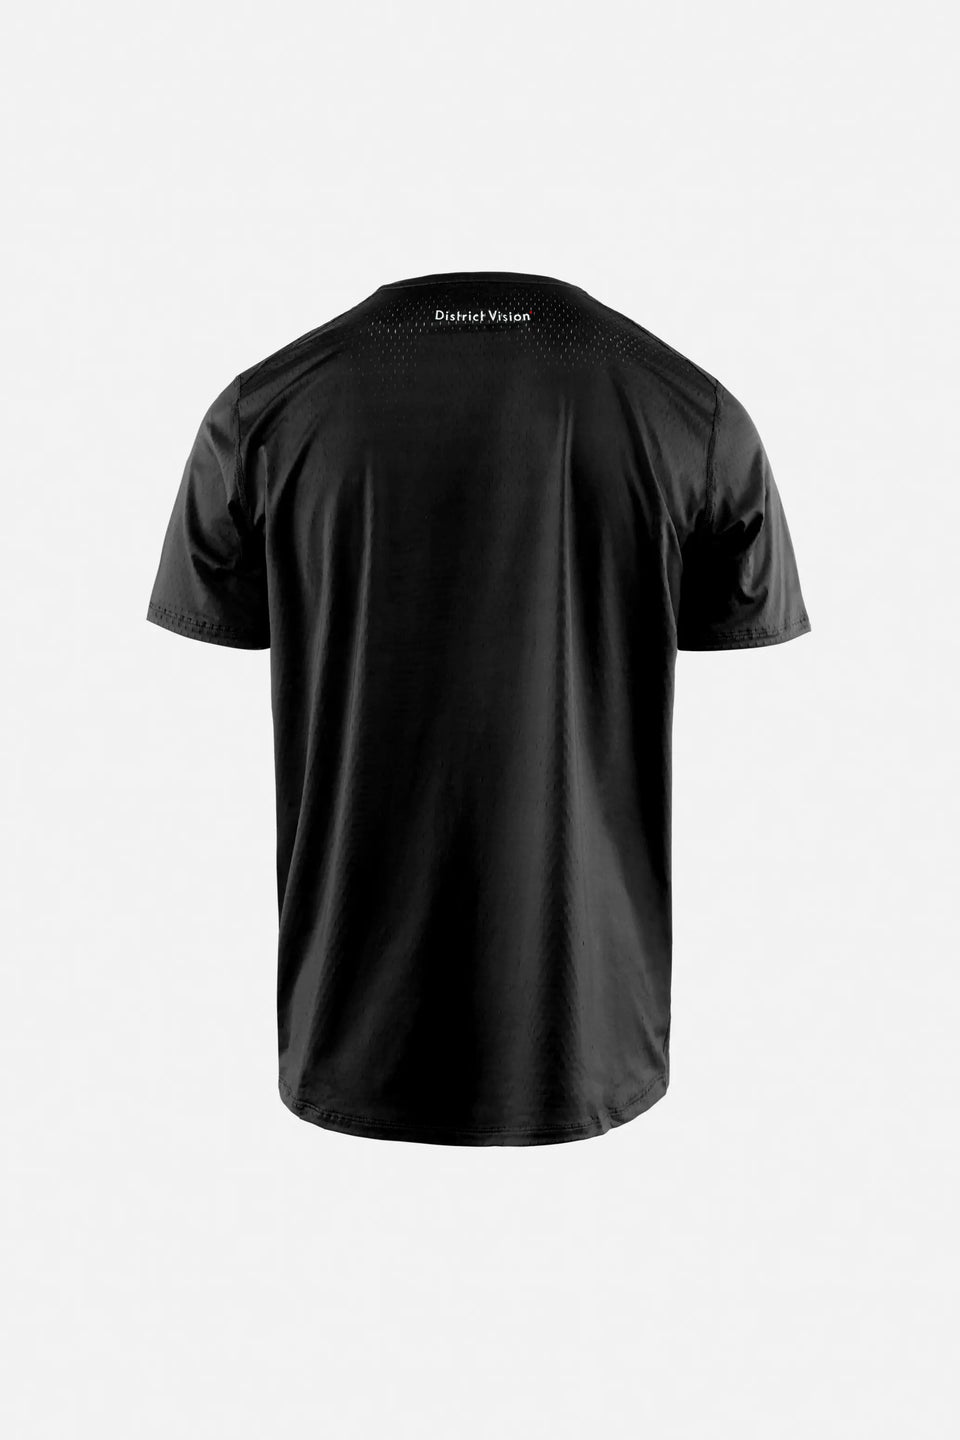 District Vision Los Angeles Running Air-Wear Short Sleeve T-Shirt Black Calculus Victoria BC Canada